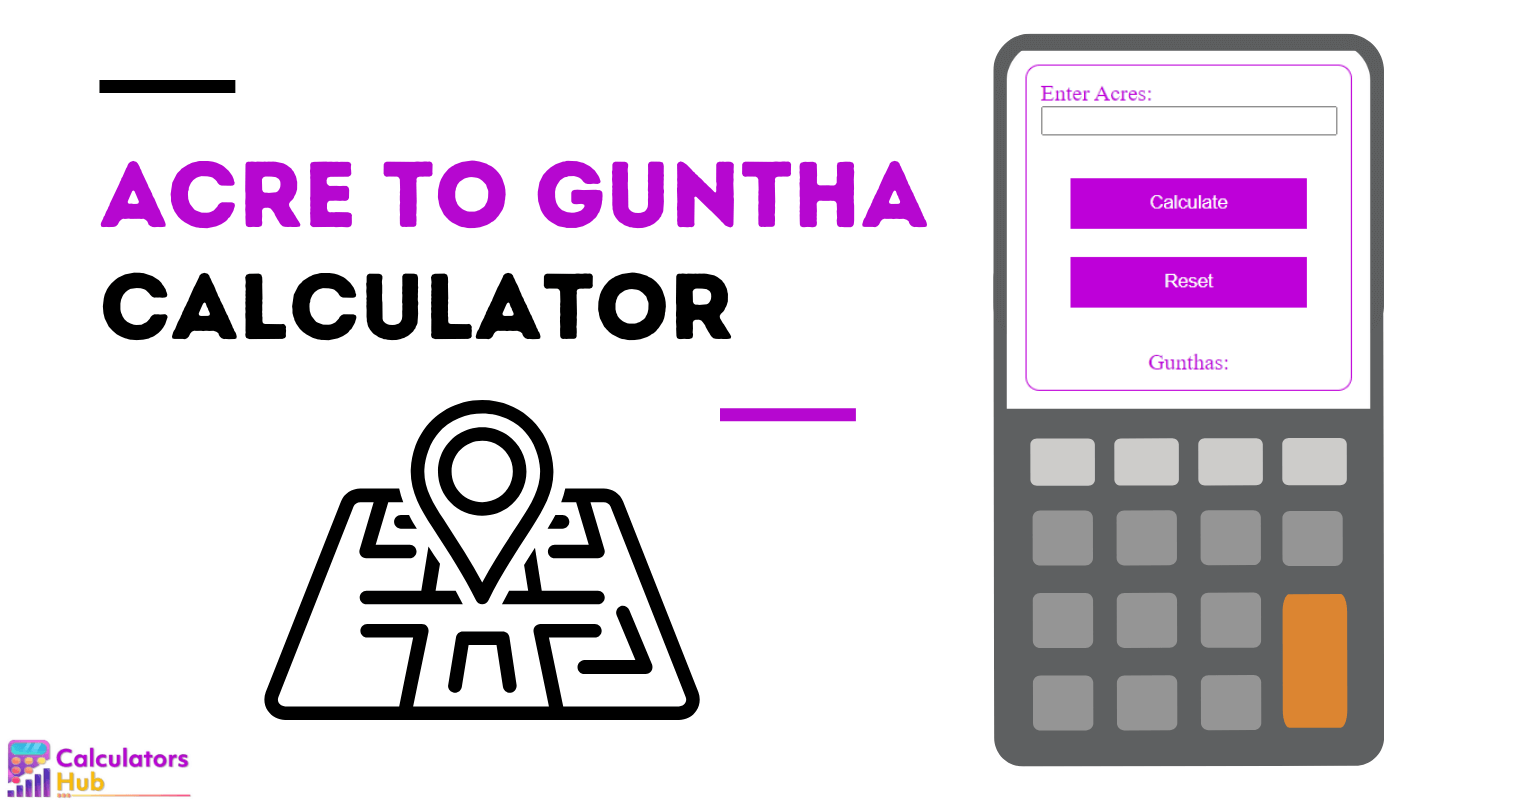 Acre to Guntha Calculator